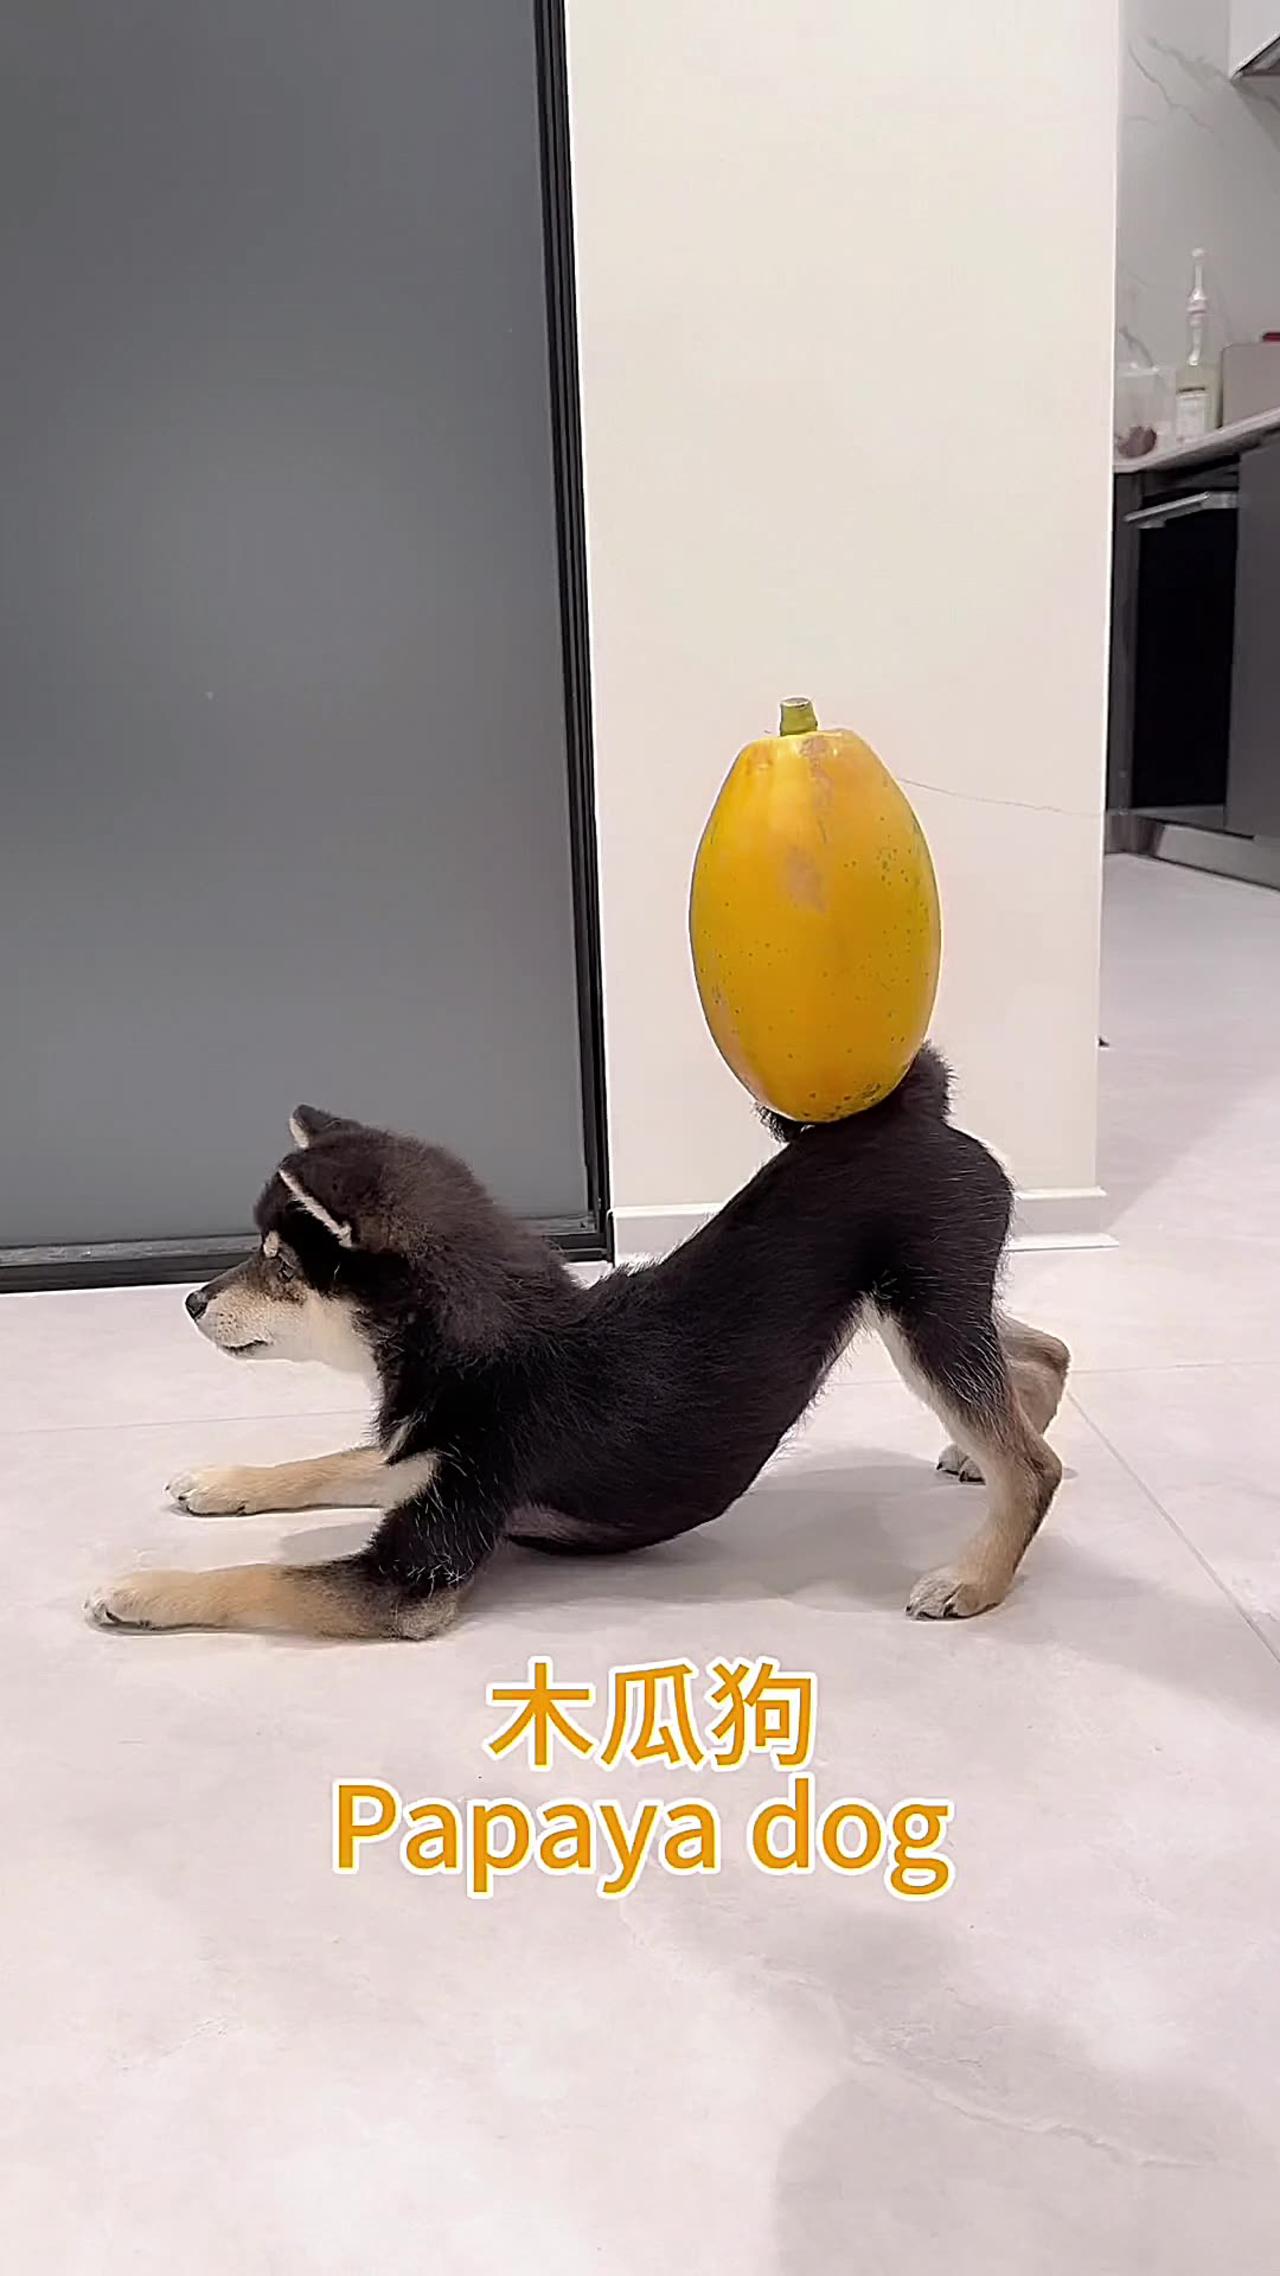 My buttocks can already lift up like a fruit stand#ShibaInu#Cute pet debut